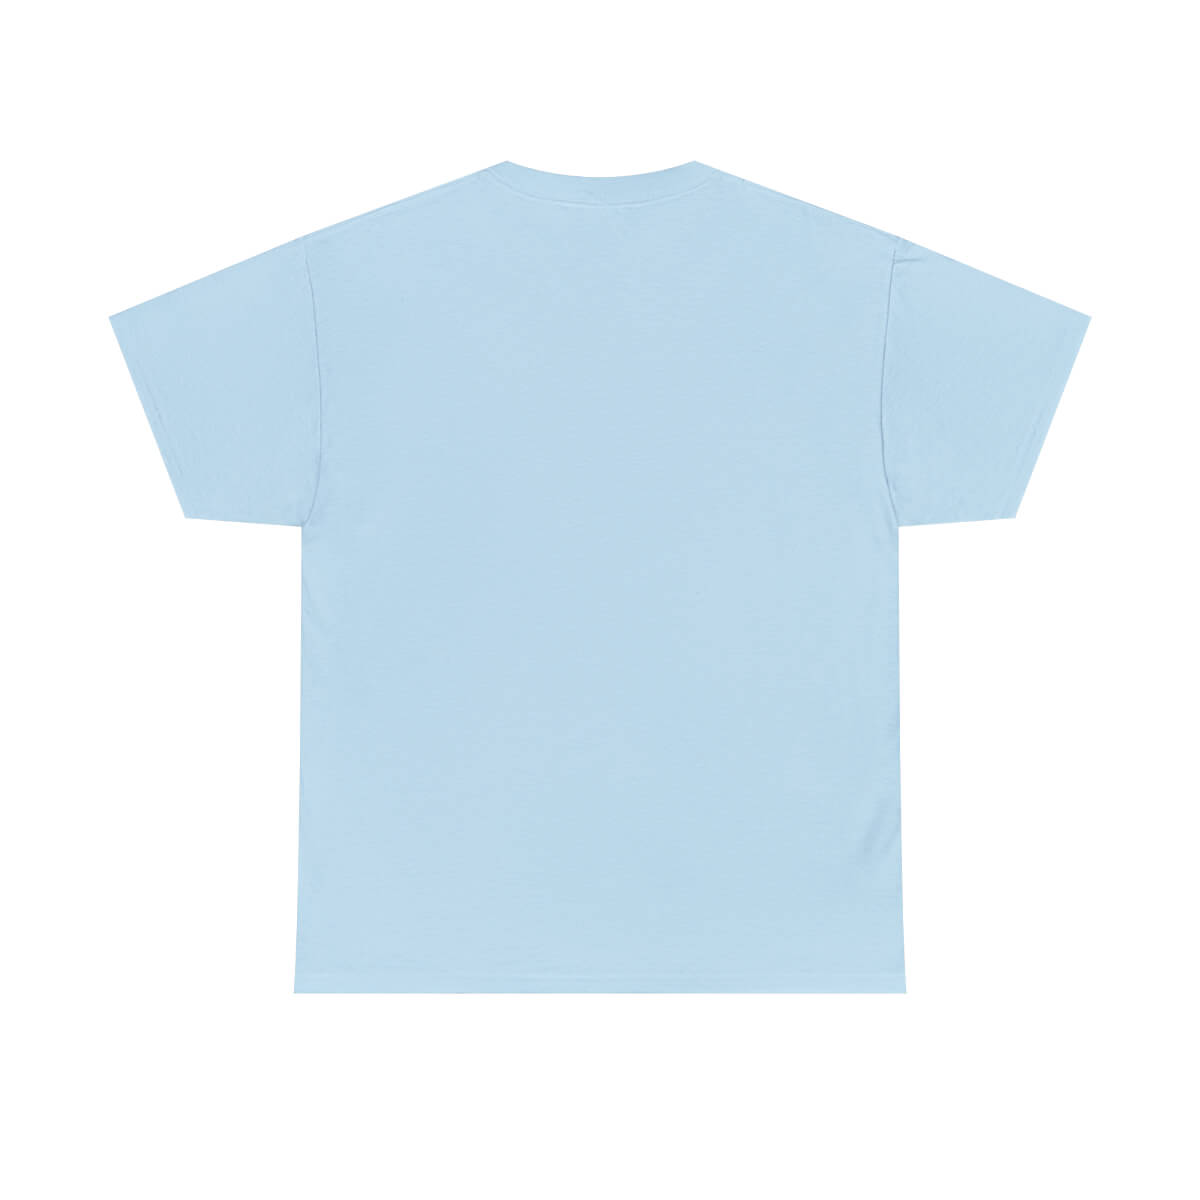 Maker Camp Full Color Adult T-Shirt Light Blue / 2XL